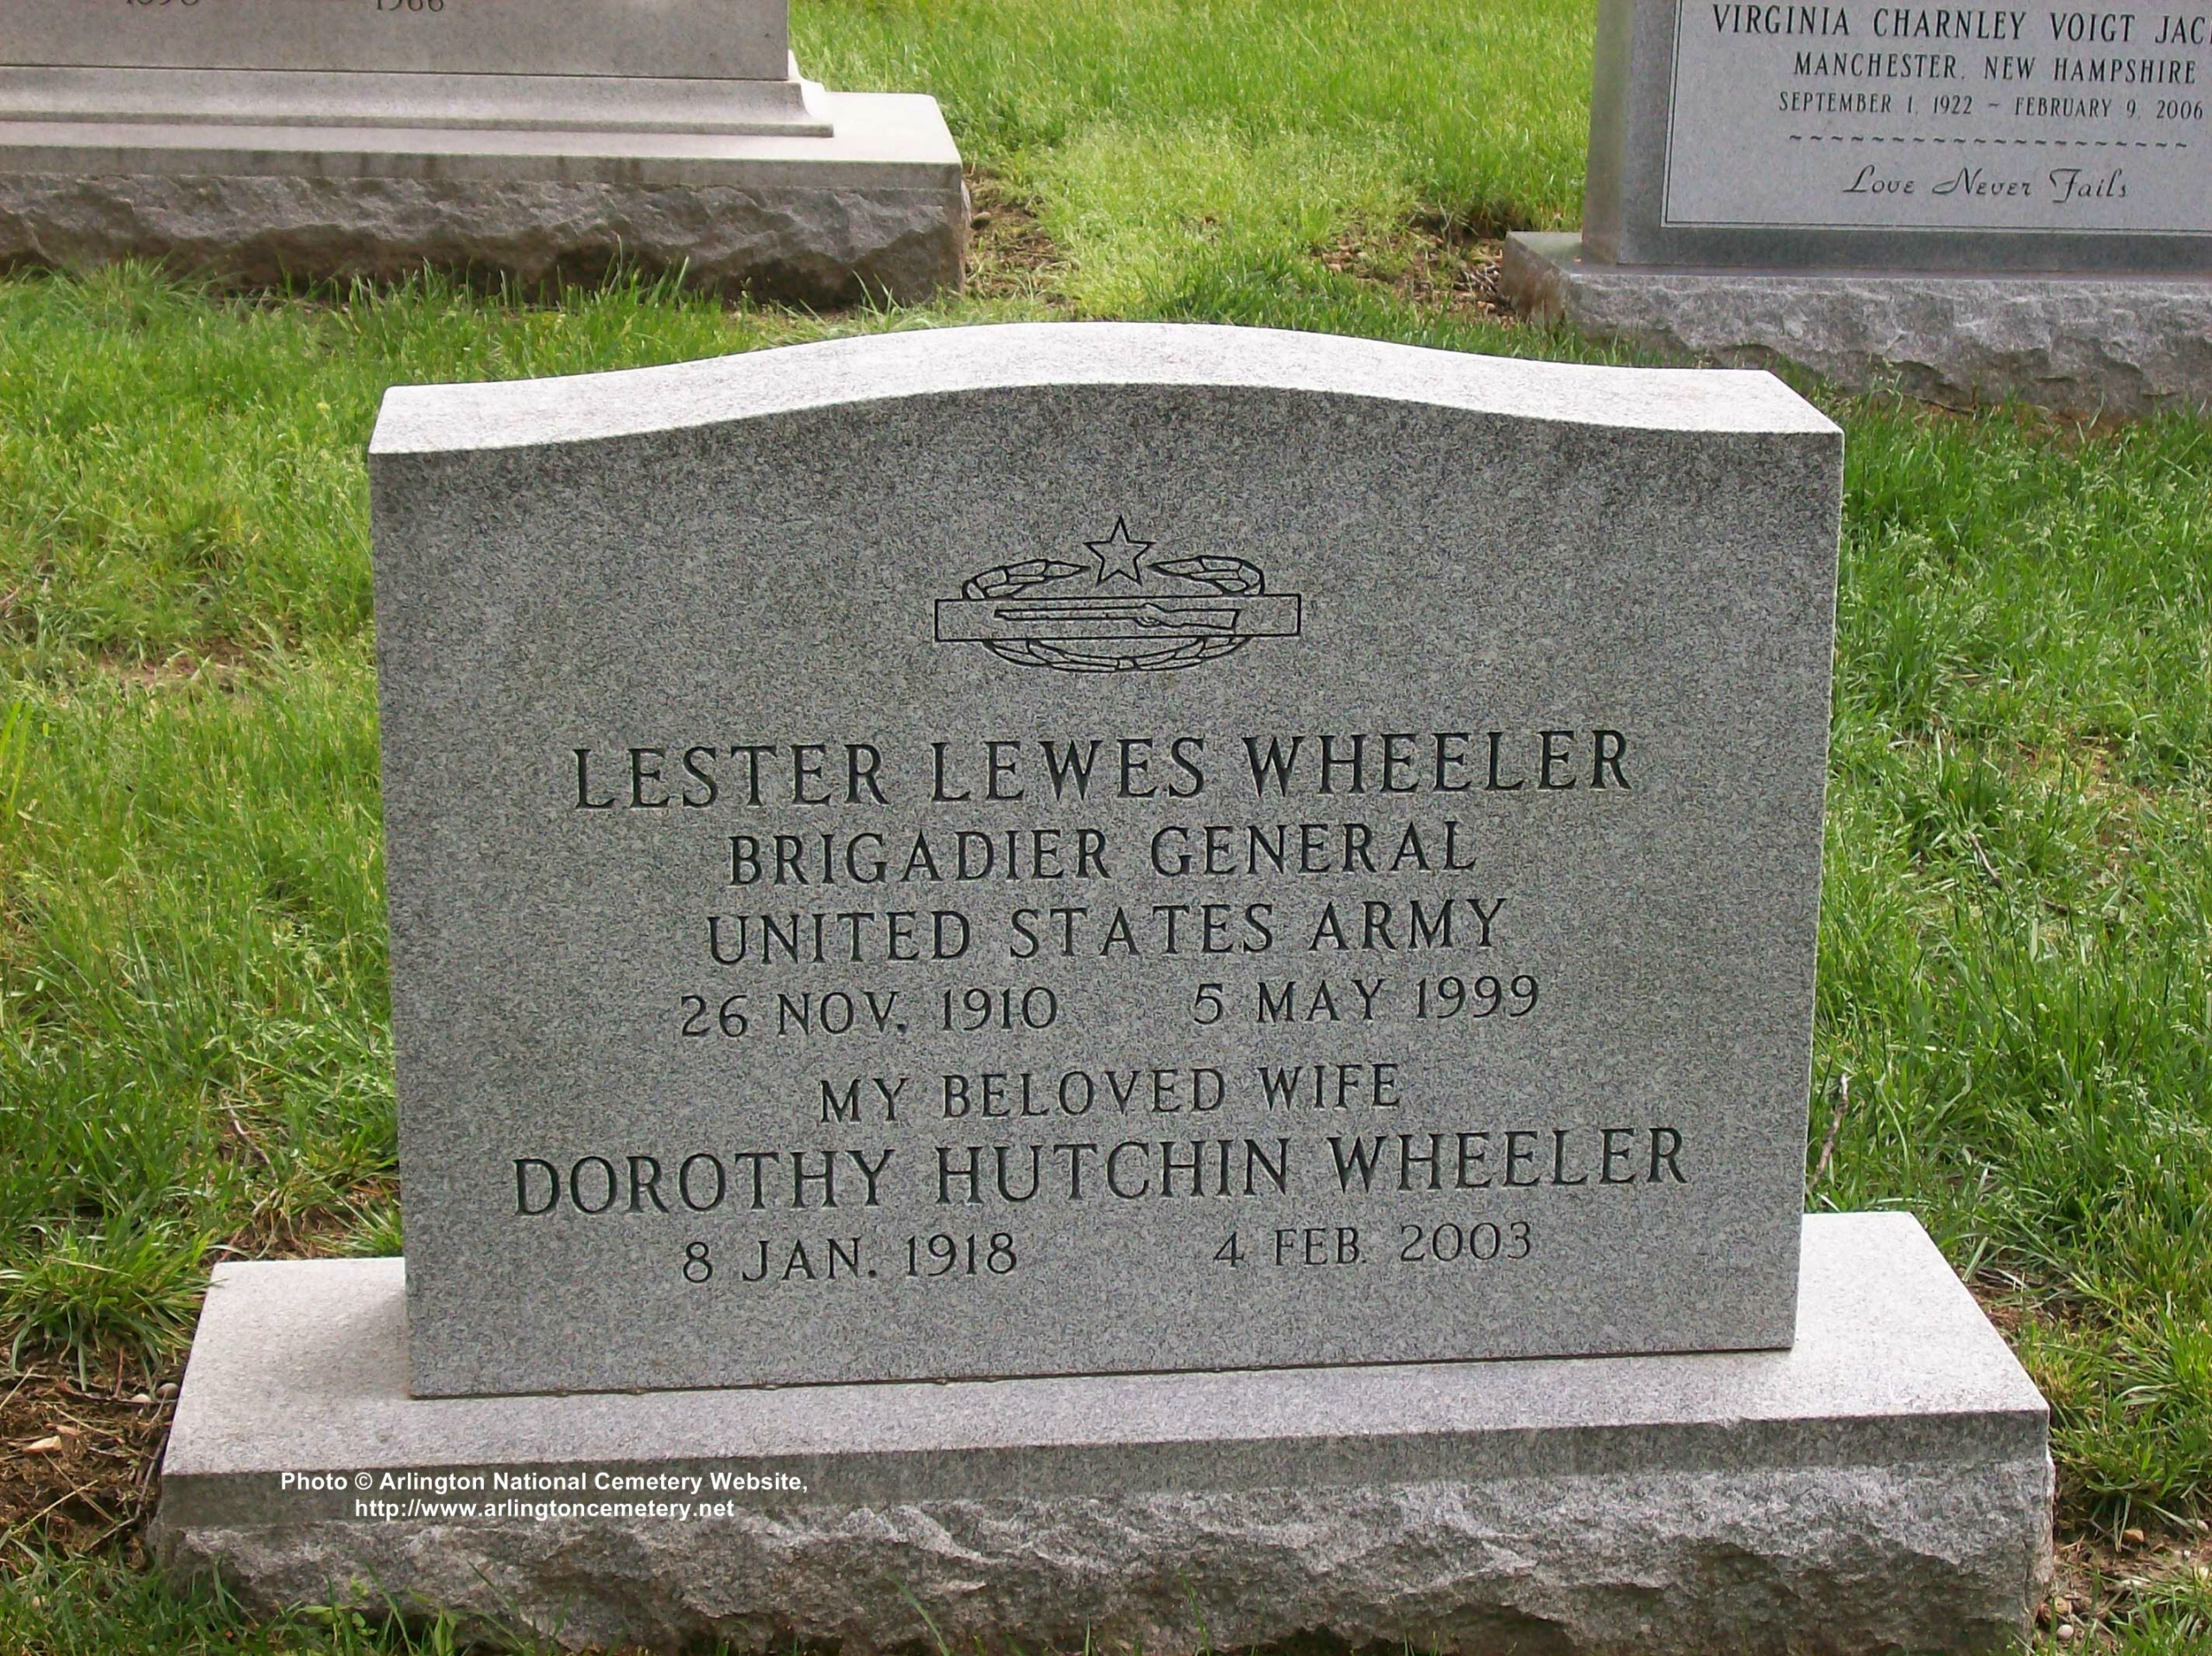 llwheeler-gravesite-photo-may-2008-001